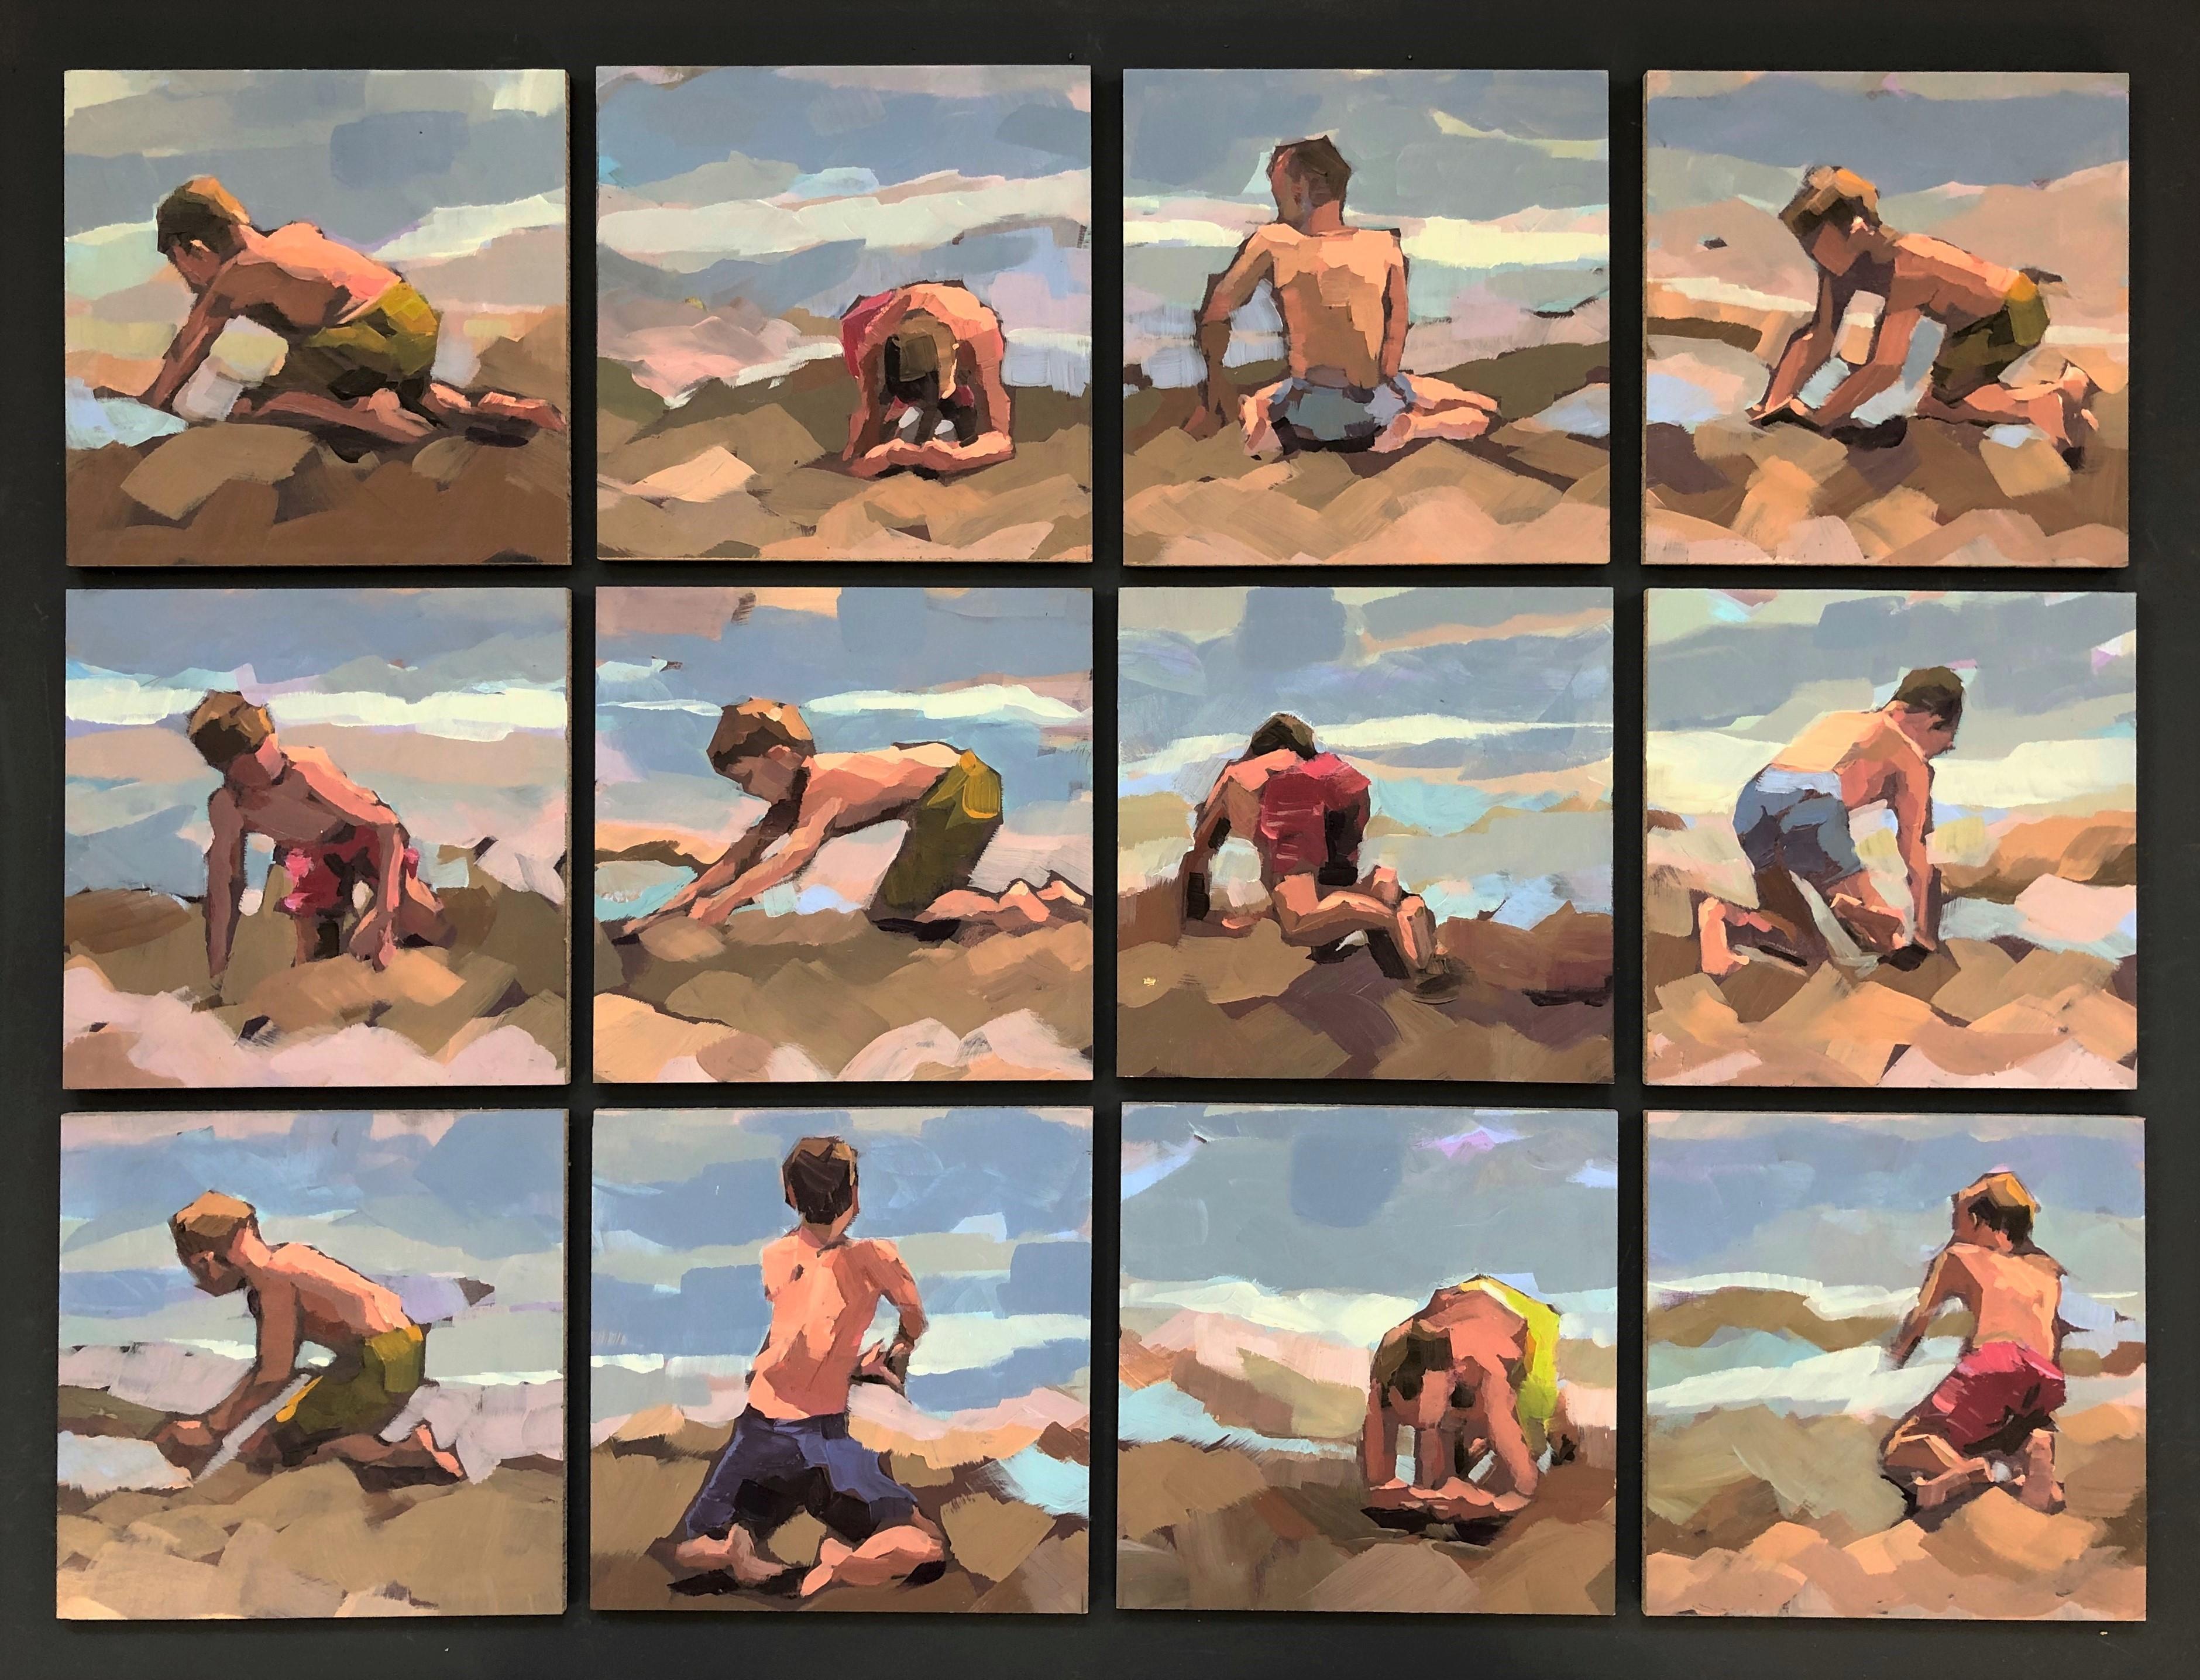 Beach Boys- 21st Century Contemporary Painting of boys playing on the beach